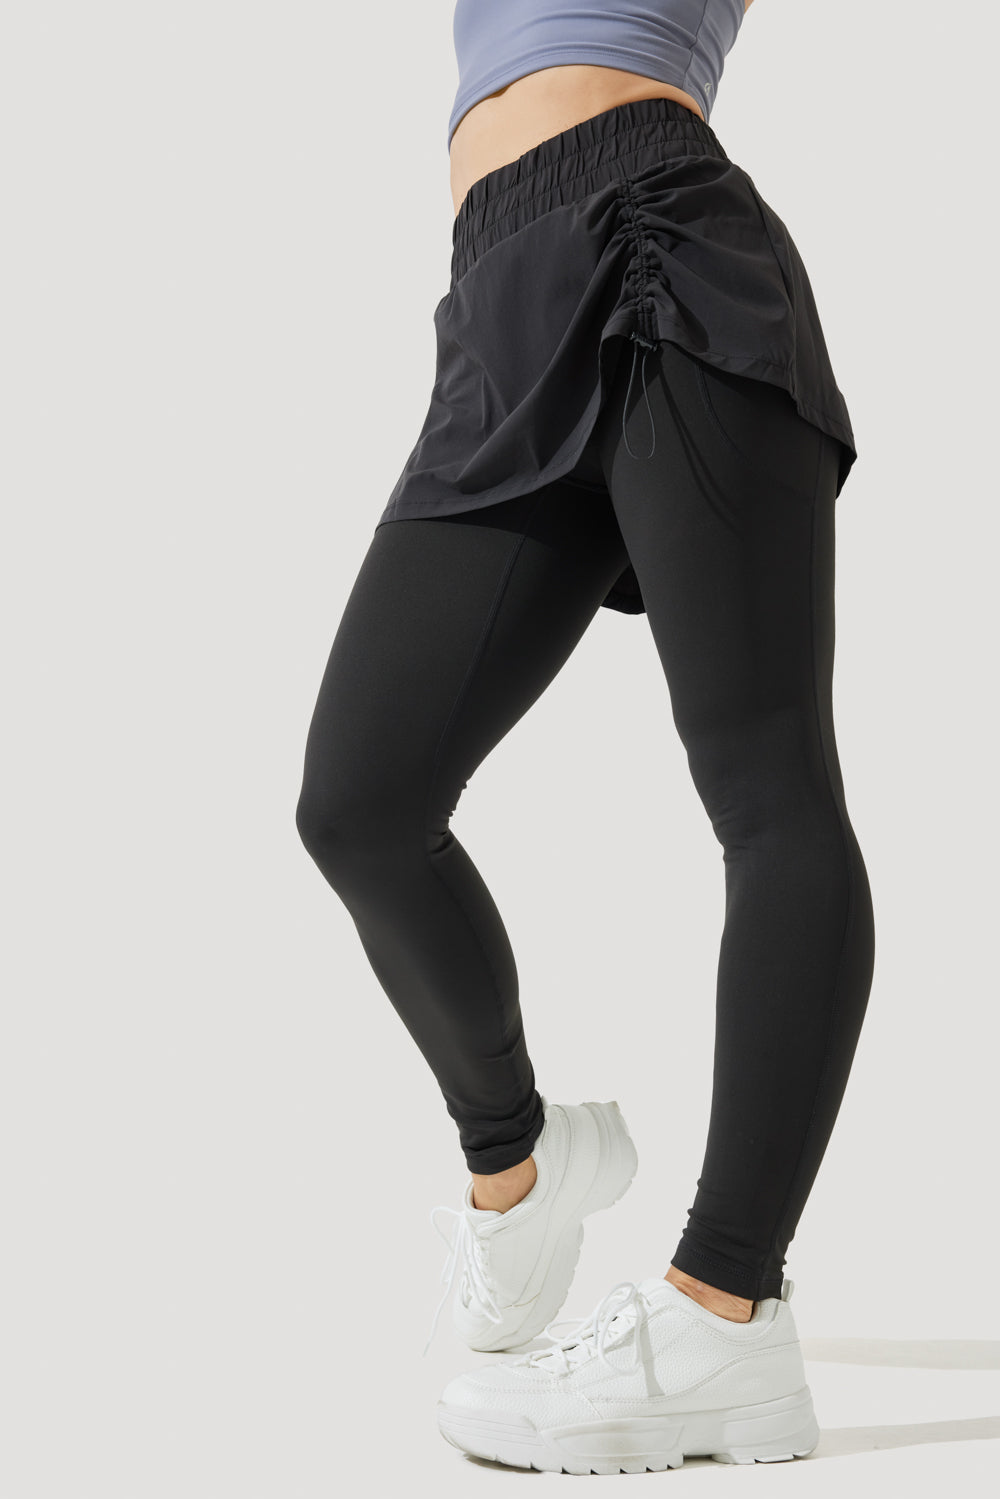 Bonds Women's Flex Legging - Black - Size S-M